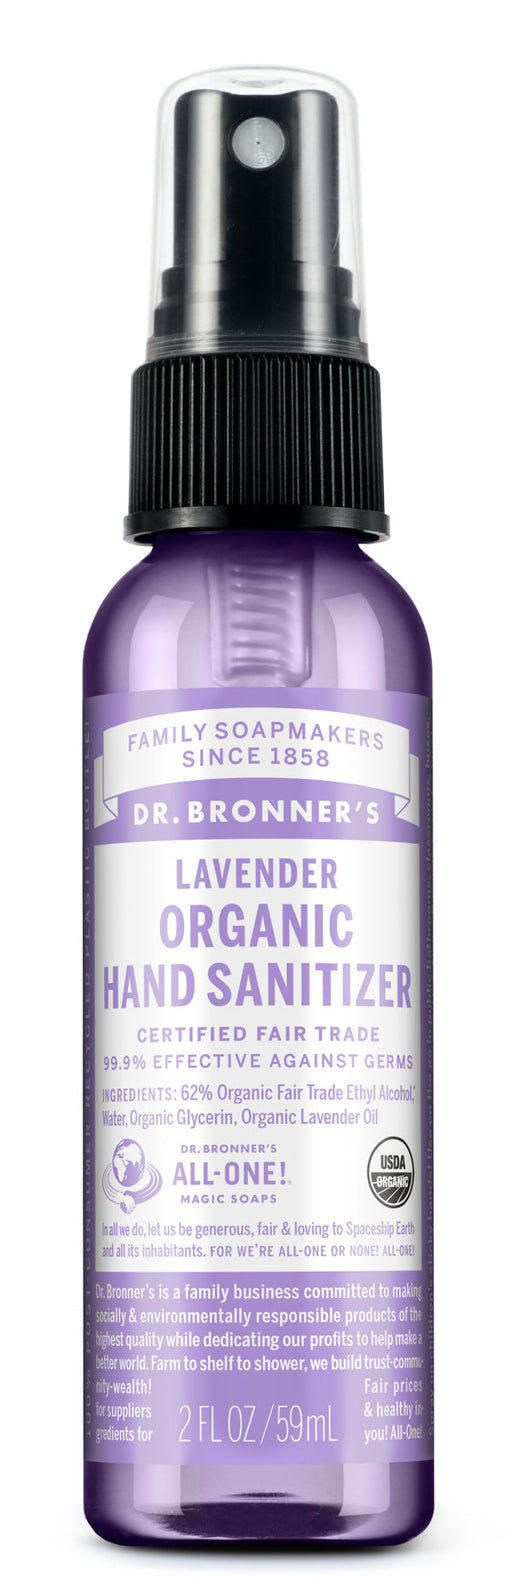 Lavender - Organic Hand Sanitizer - by Dr Bronner's |ProCare Outlet|